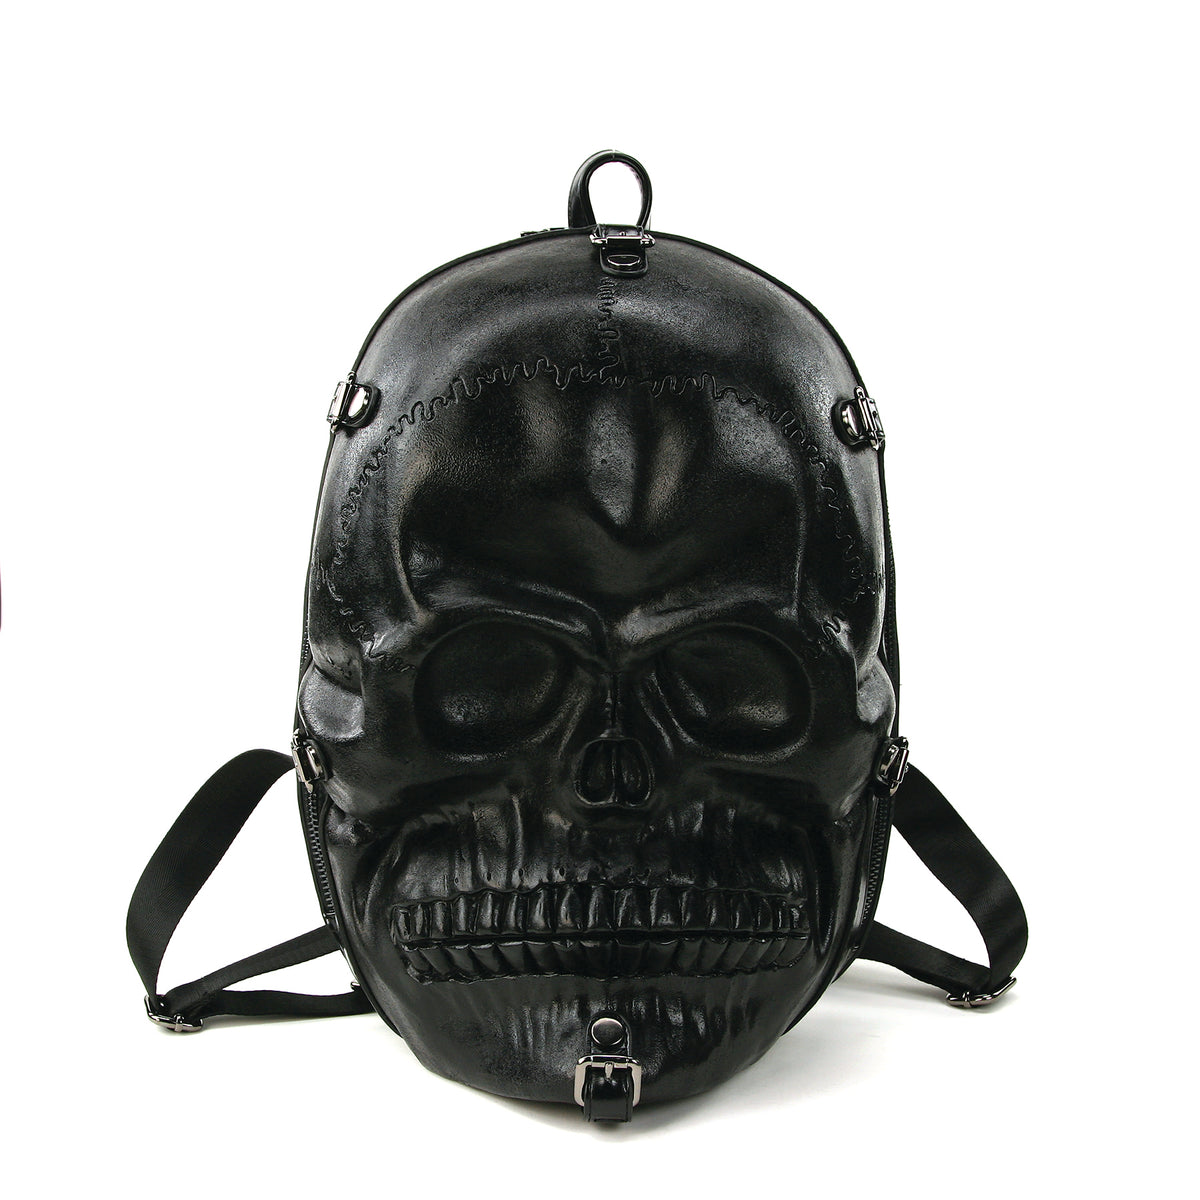 Skull Encased in Square Handheld Bag in Vinyl Material – www